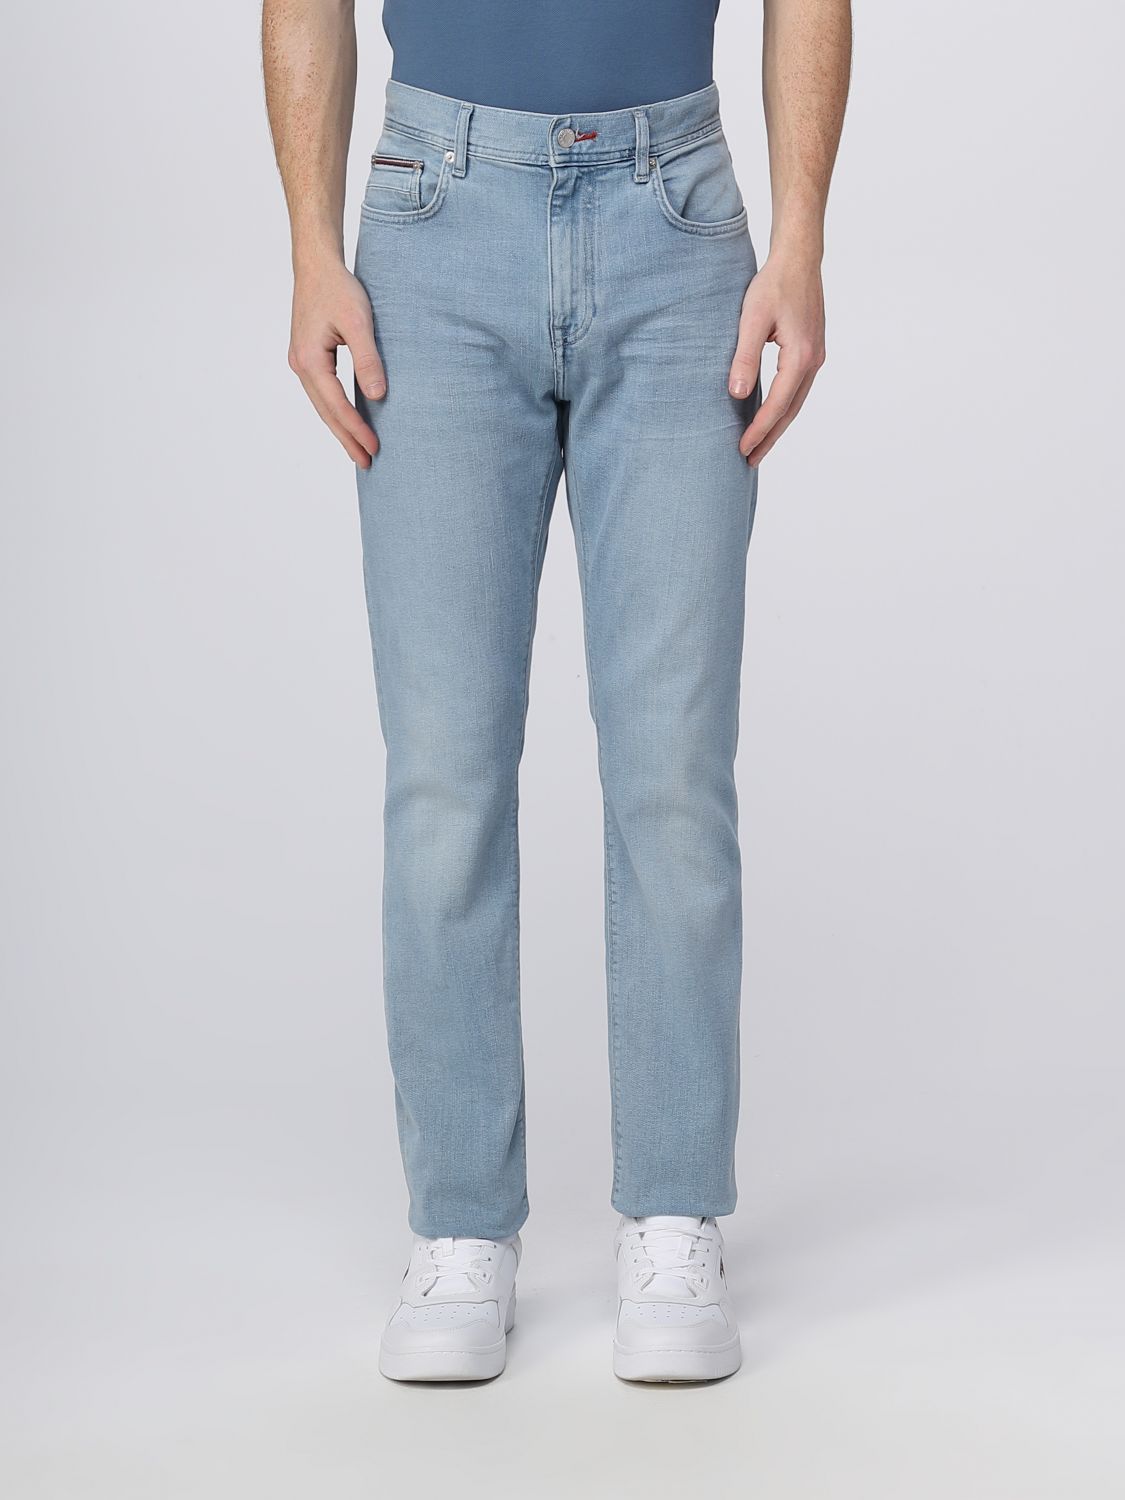 Confronteren stoeprand filter TOMMY HILFIGER: jeans for man - Denim | Tommy Hilfiger jeans MW0MW31095  online on GIGLIO.COM